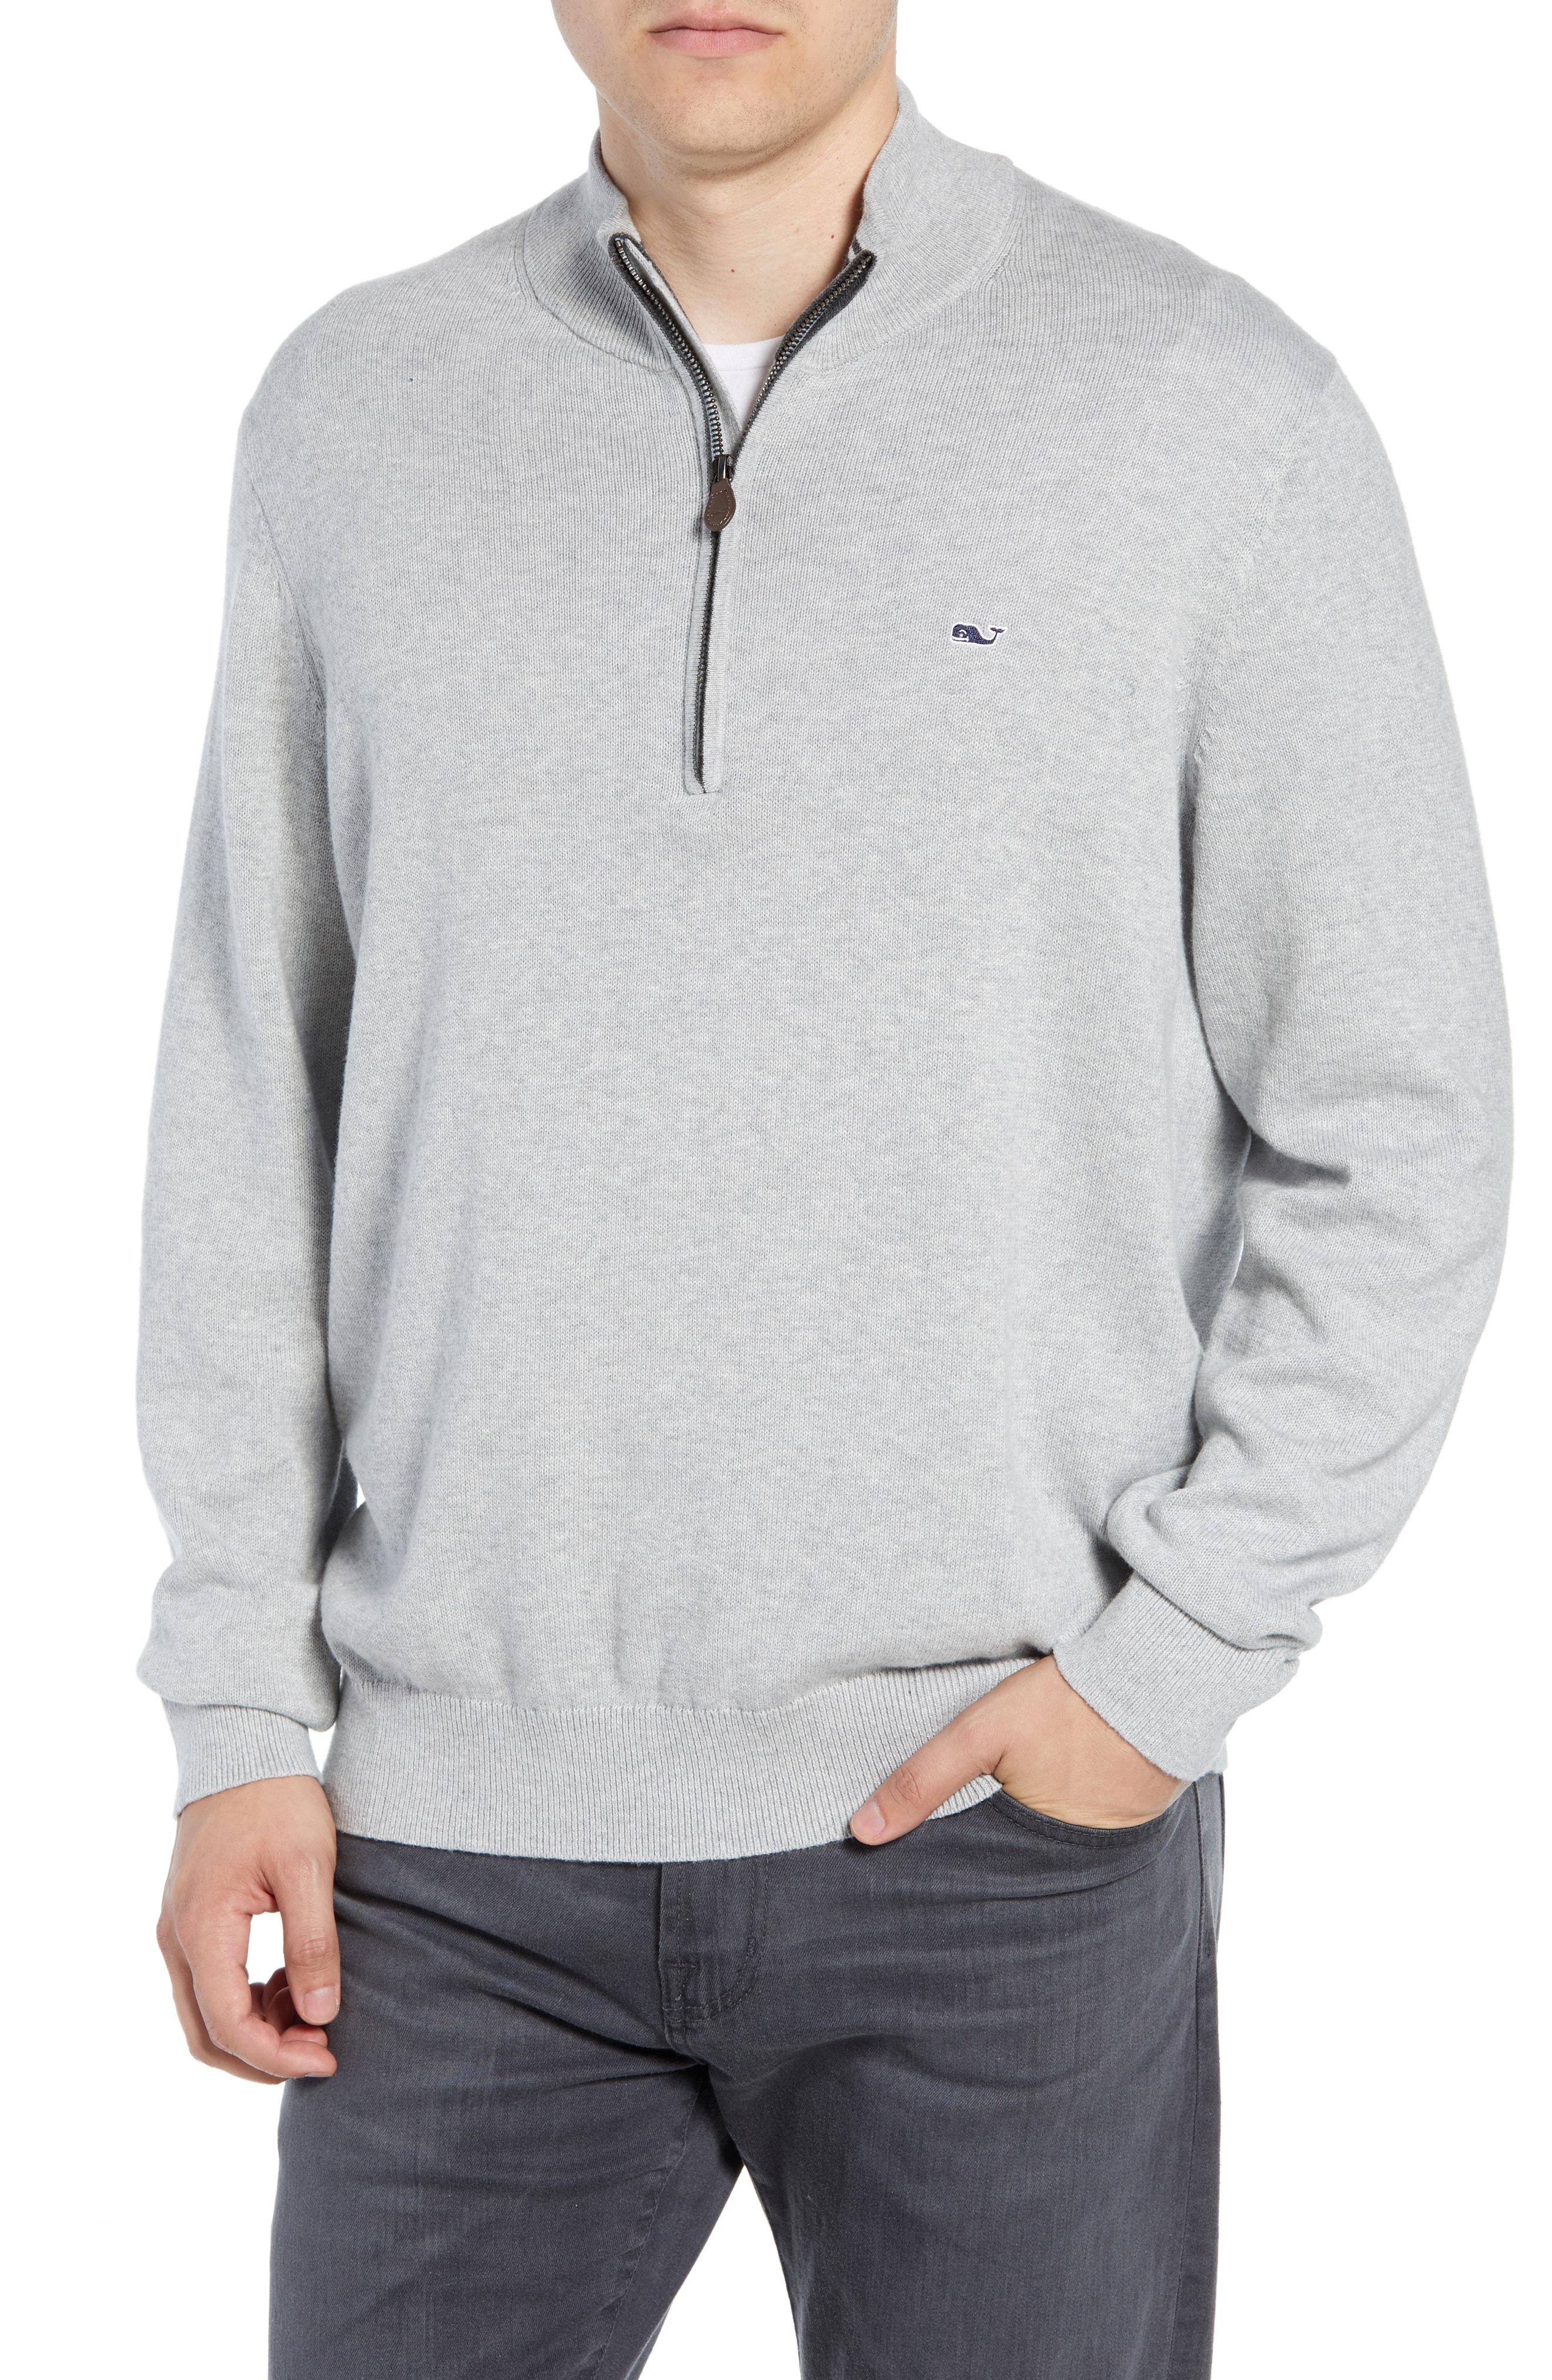 Lyst - Vineyard Vines Palm Beach Quarter-zip Sweater in Gray for Men